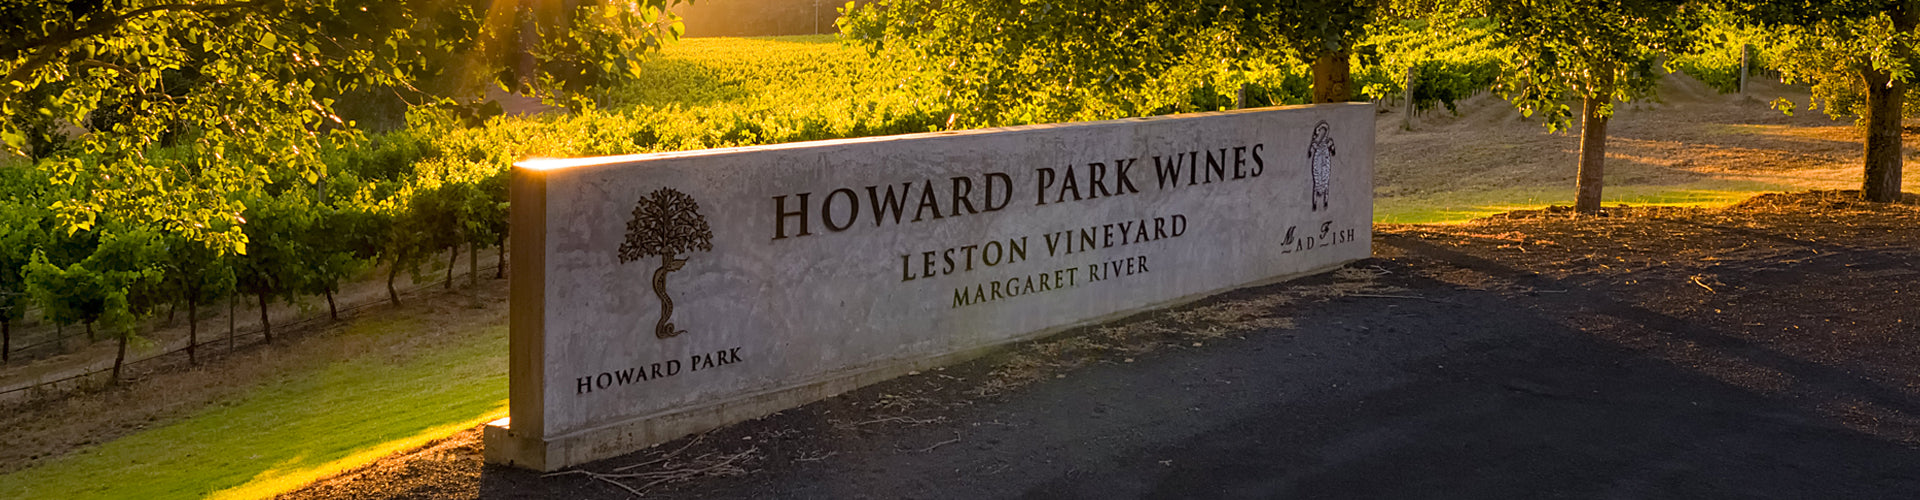 Howard Park Wines Winery Sign